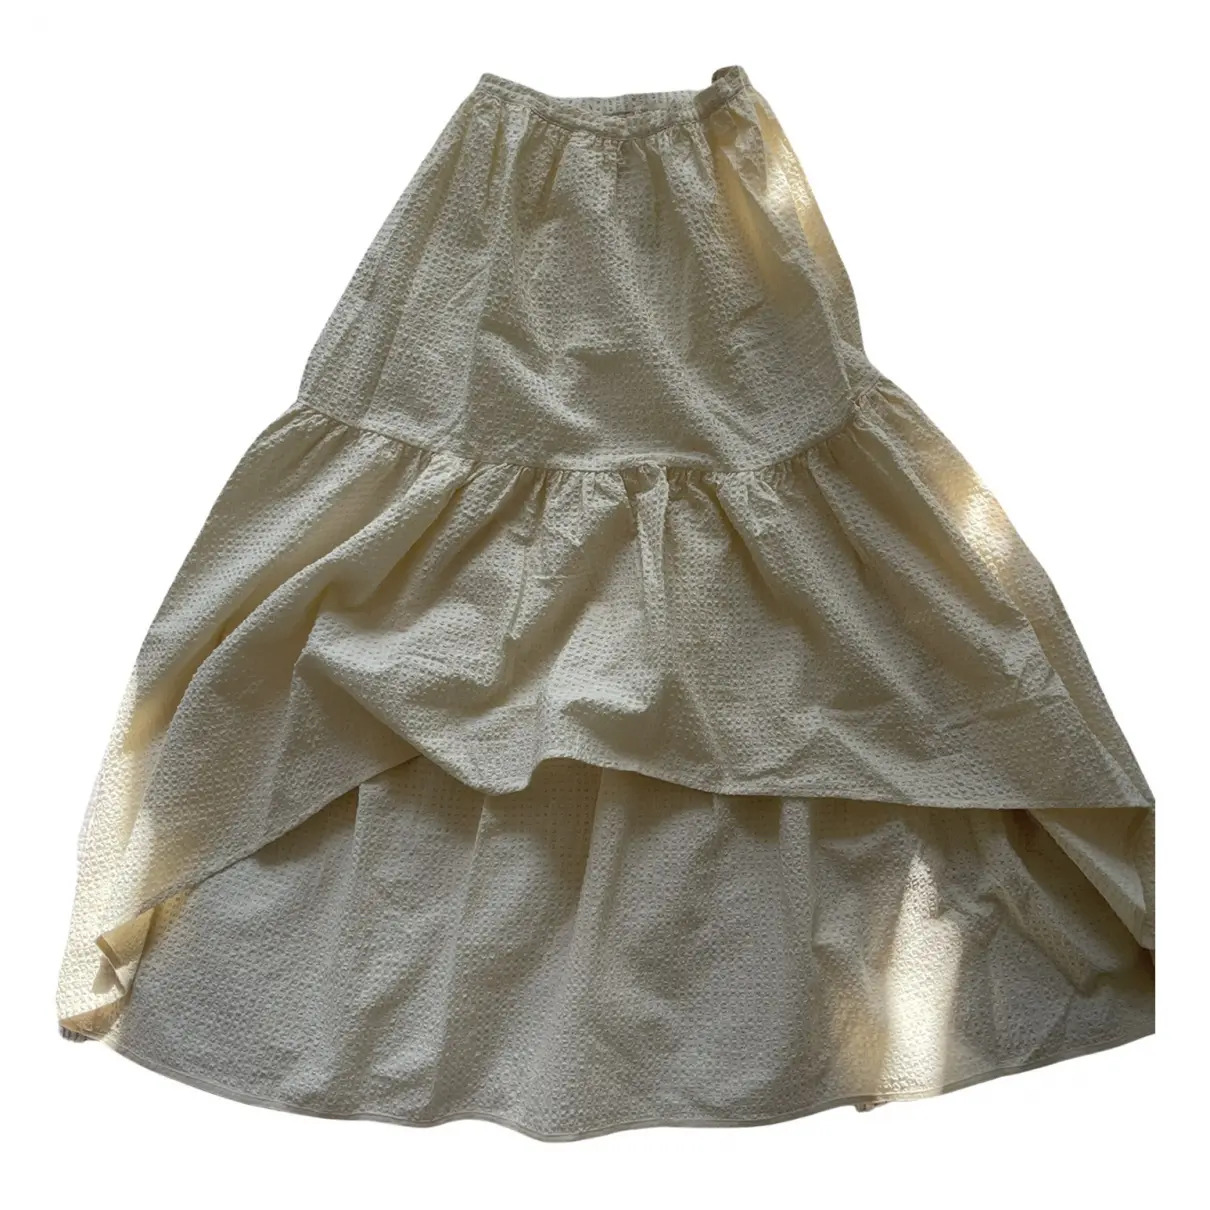 Spring Summer 2021 mid-length skirt Maje